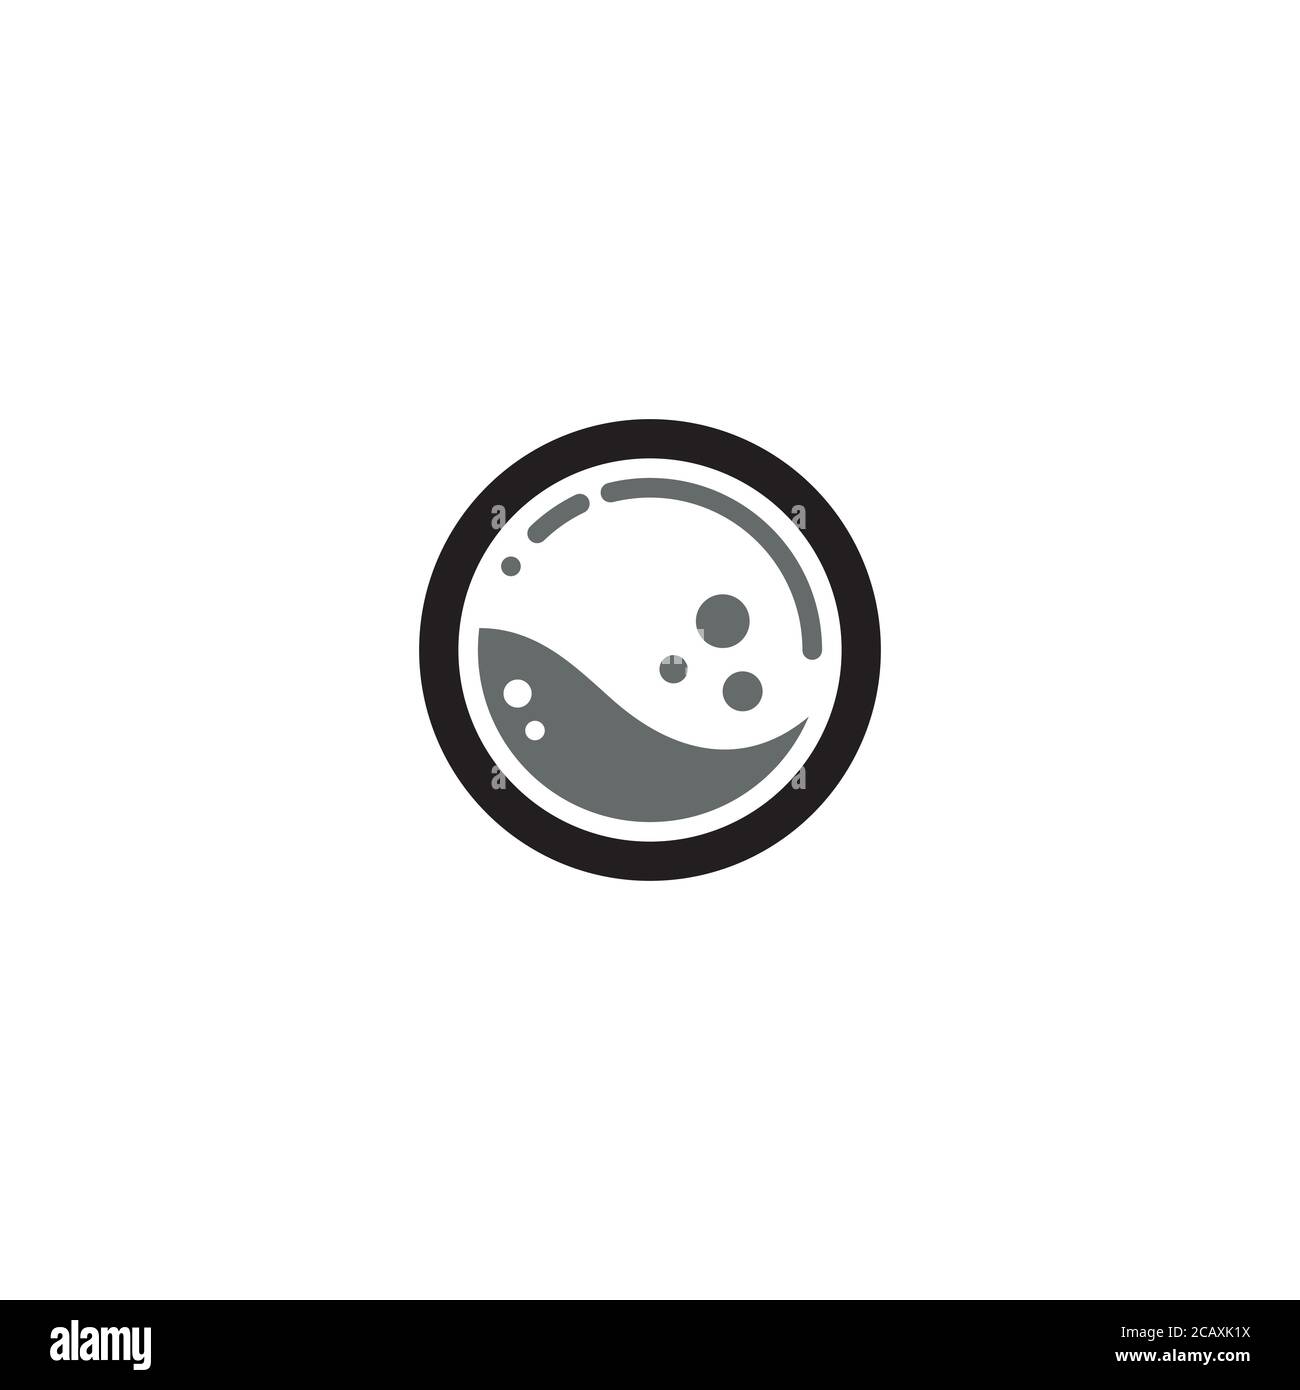 Washing Machine Door logo / icon design Stock Vector